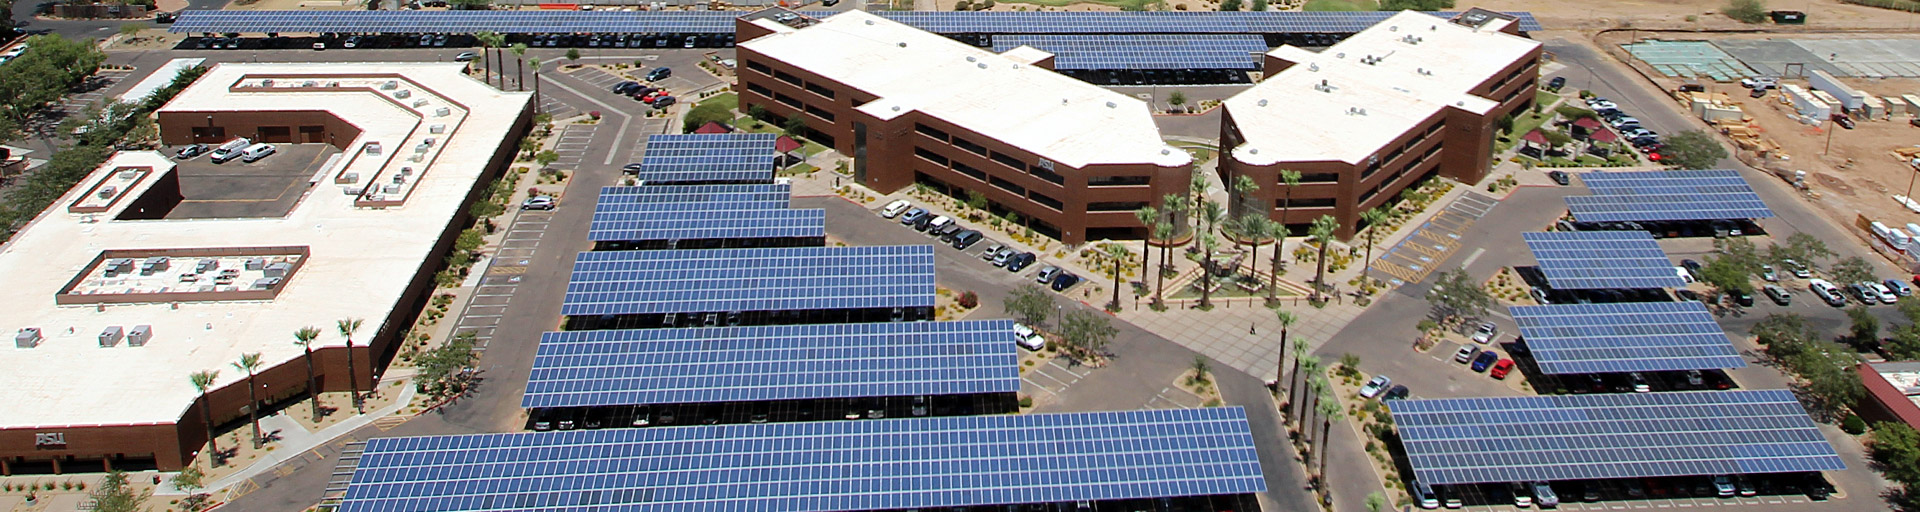 Parking Lot 55 - University Center - solar